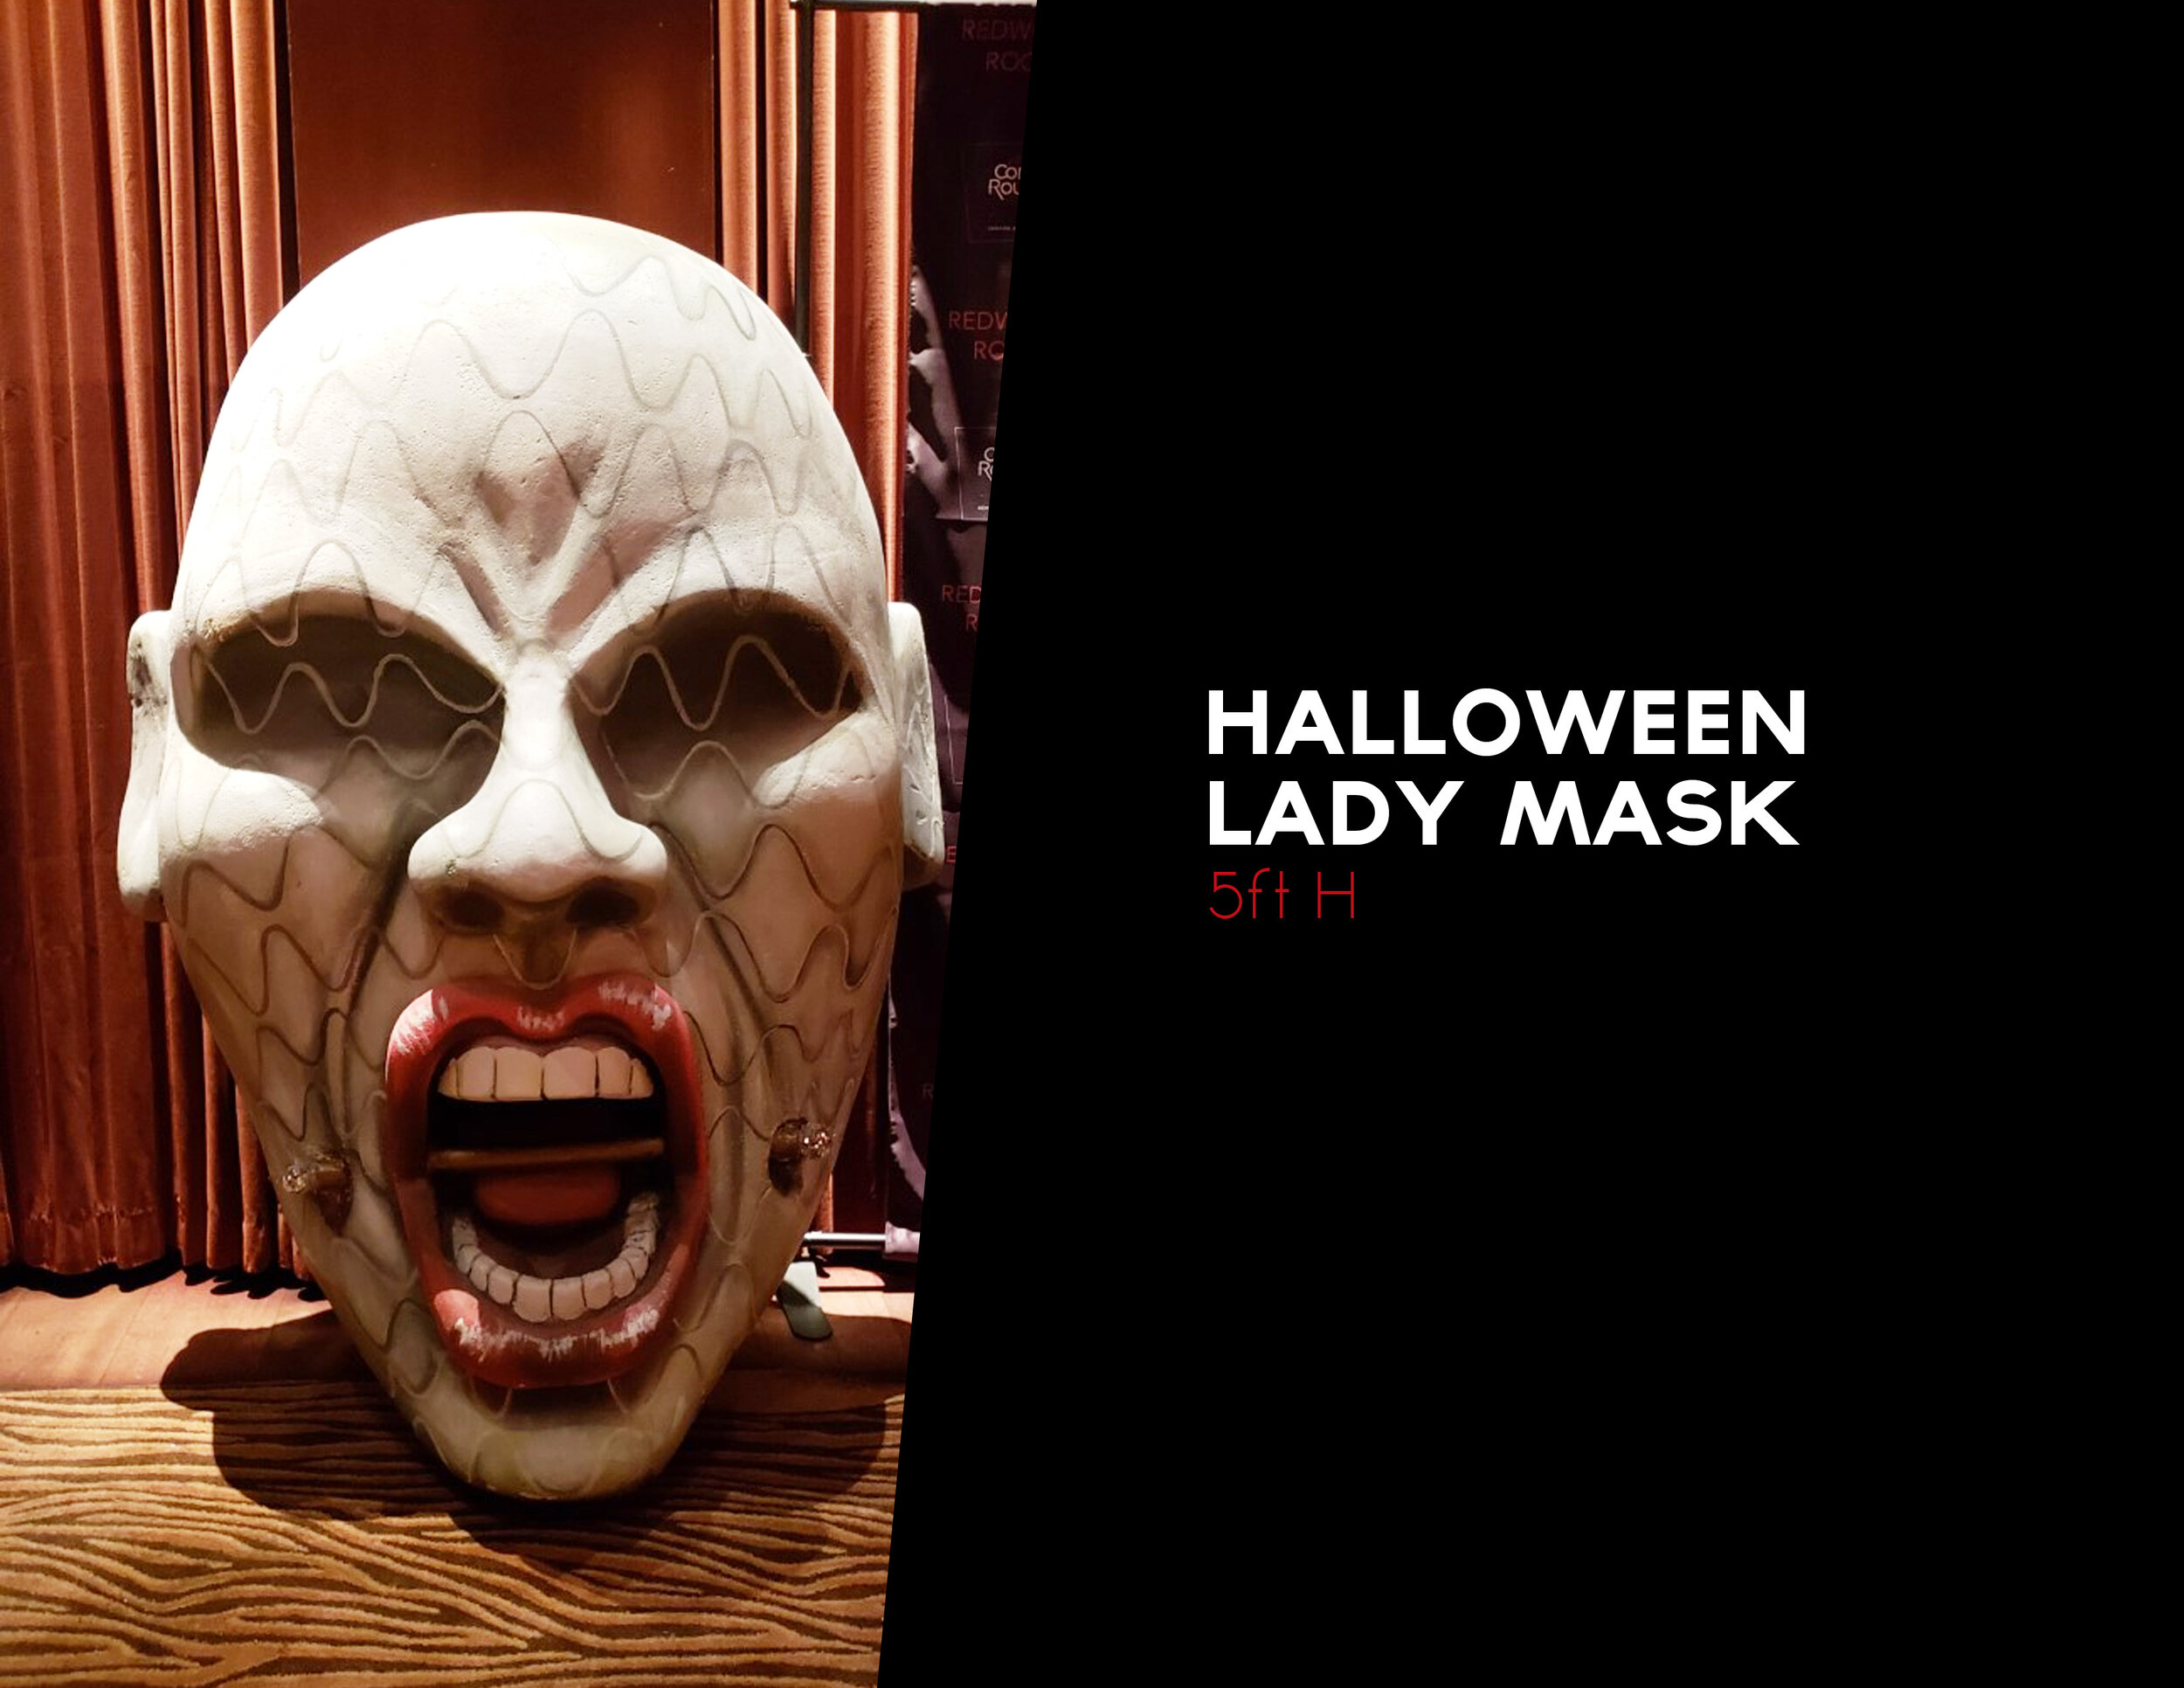 5ft Halloween Lady Mask Rental.jpg